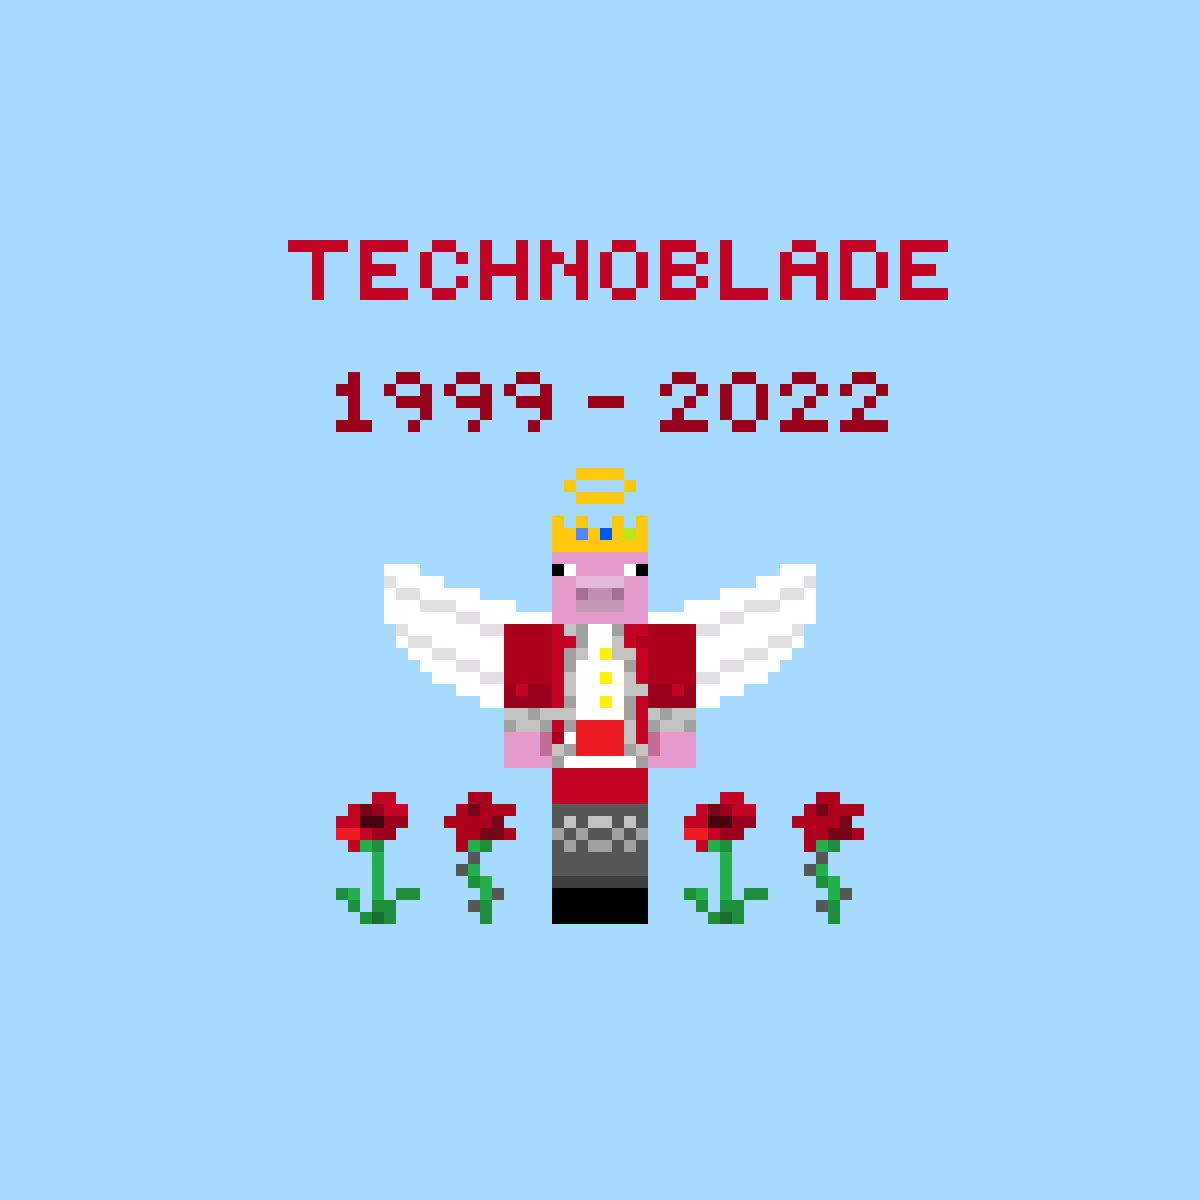 Rest In Peace Technoblade 1999-2022 Kingdom of God-Technoblade